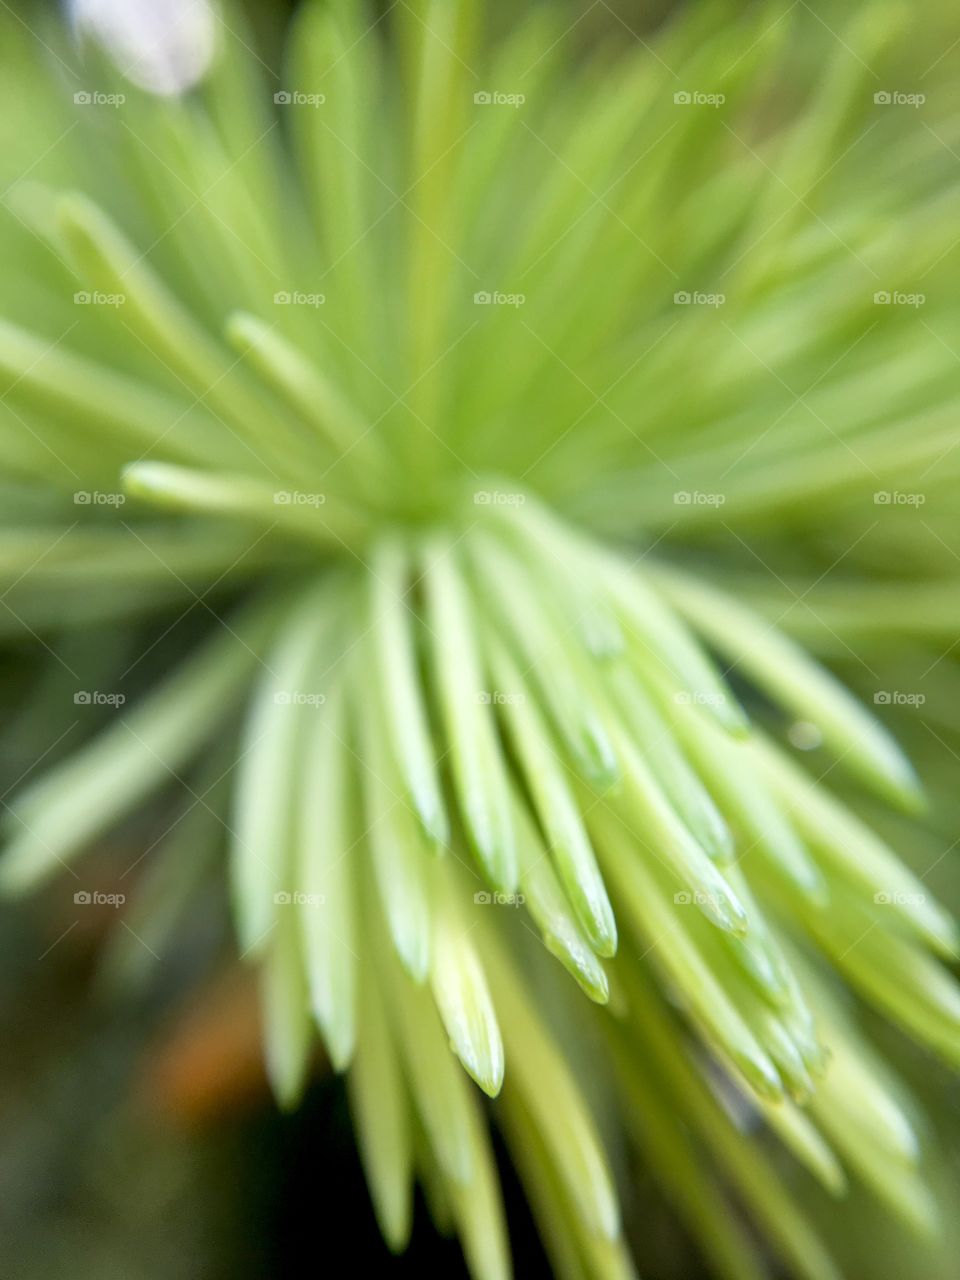 Pine's leafs